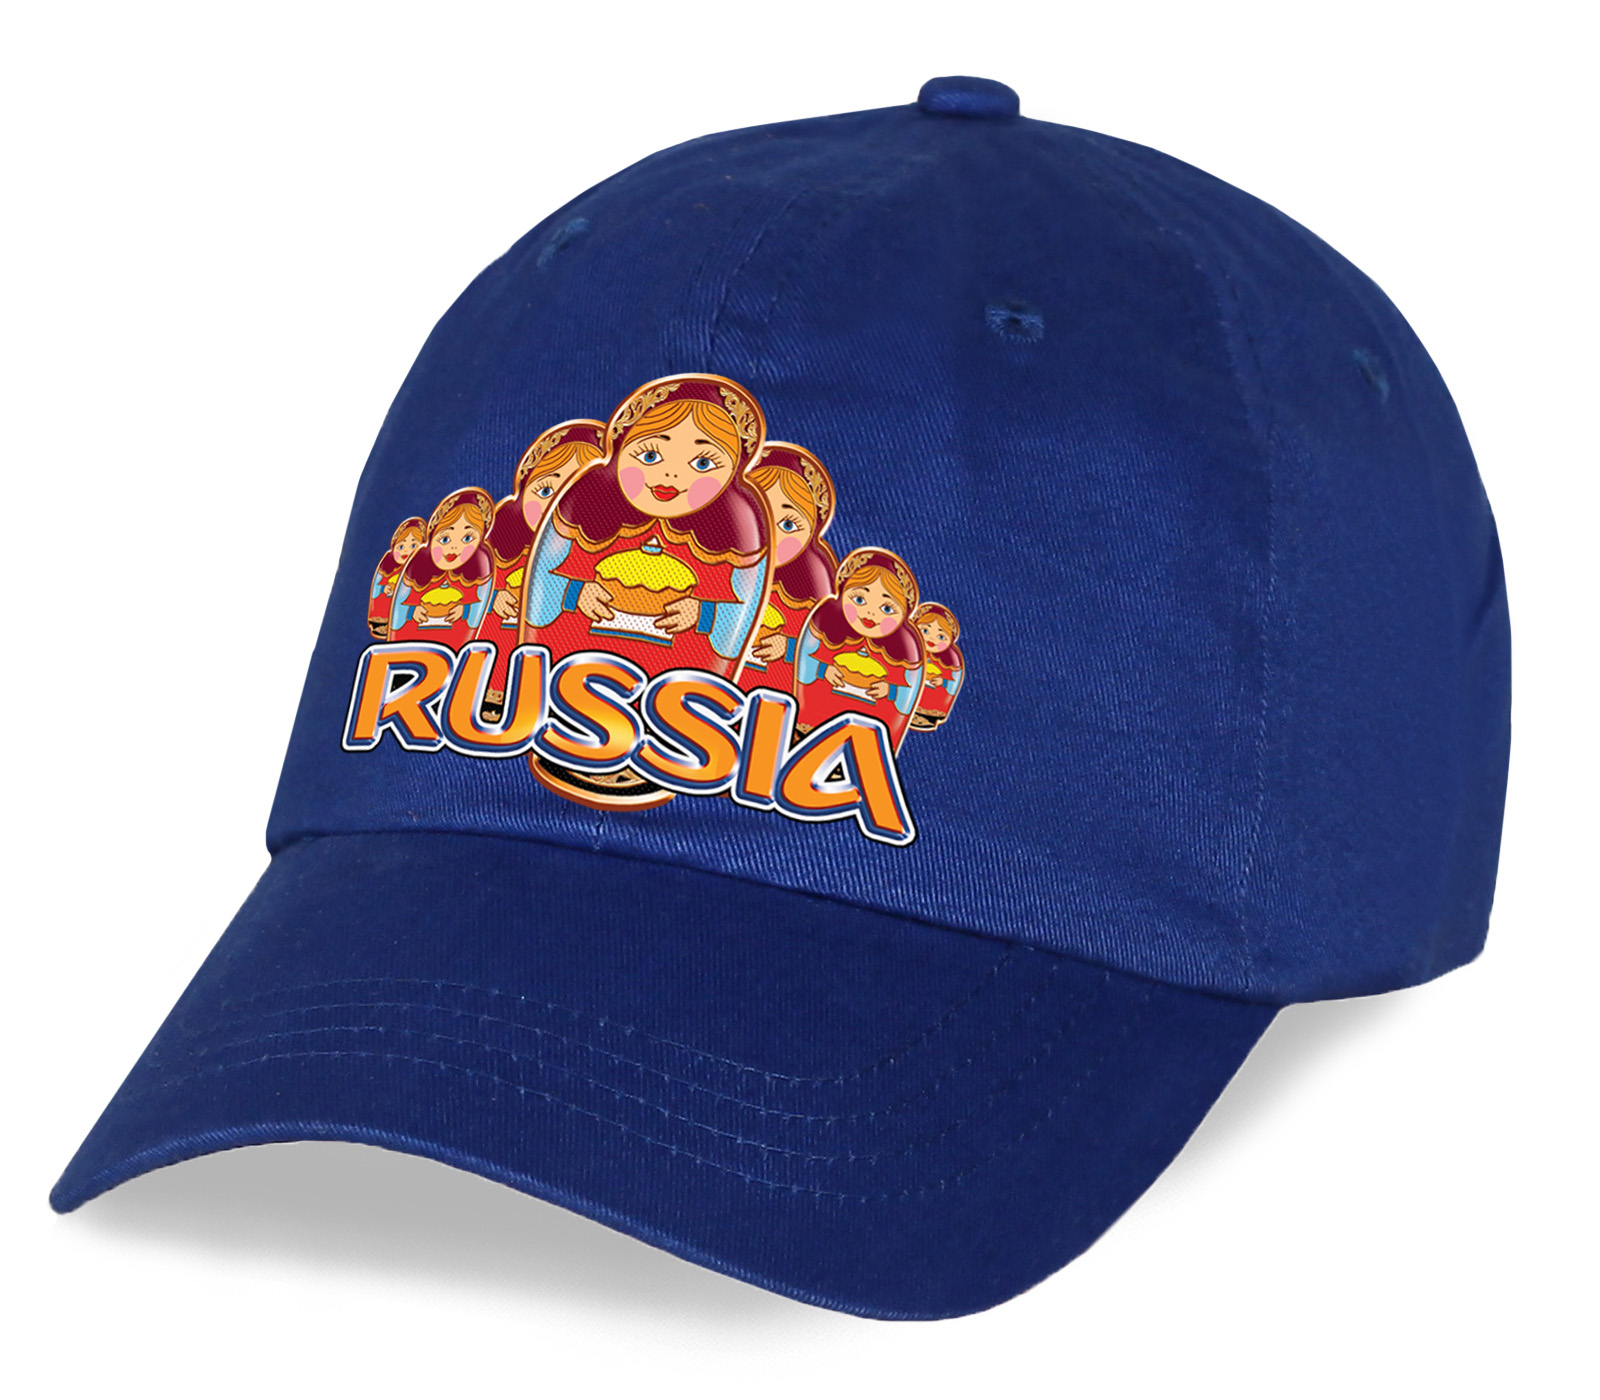 Заказать недорого кепки Россия онлайн недорого